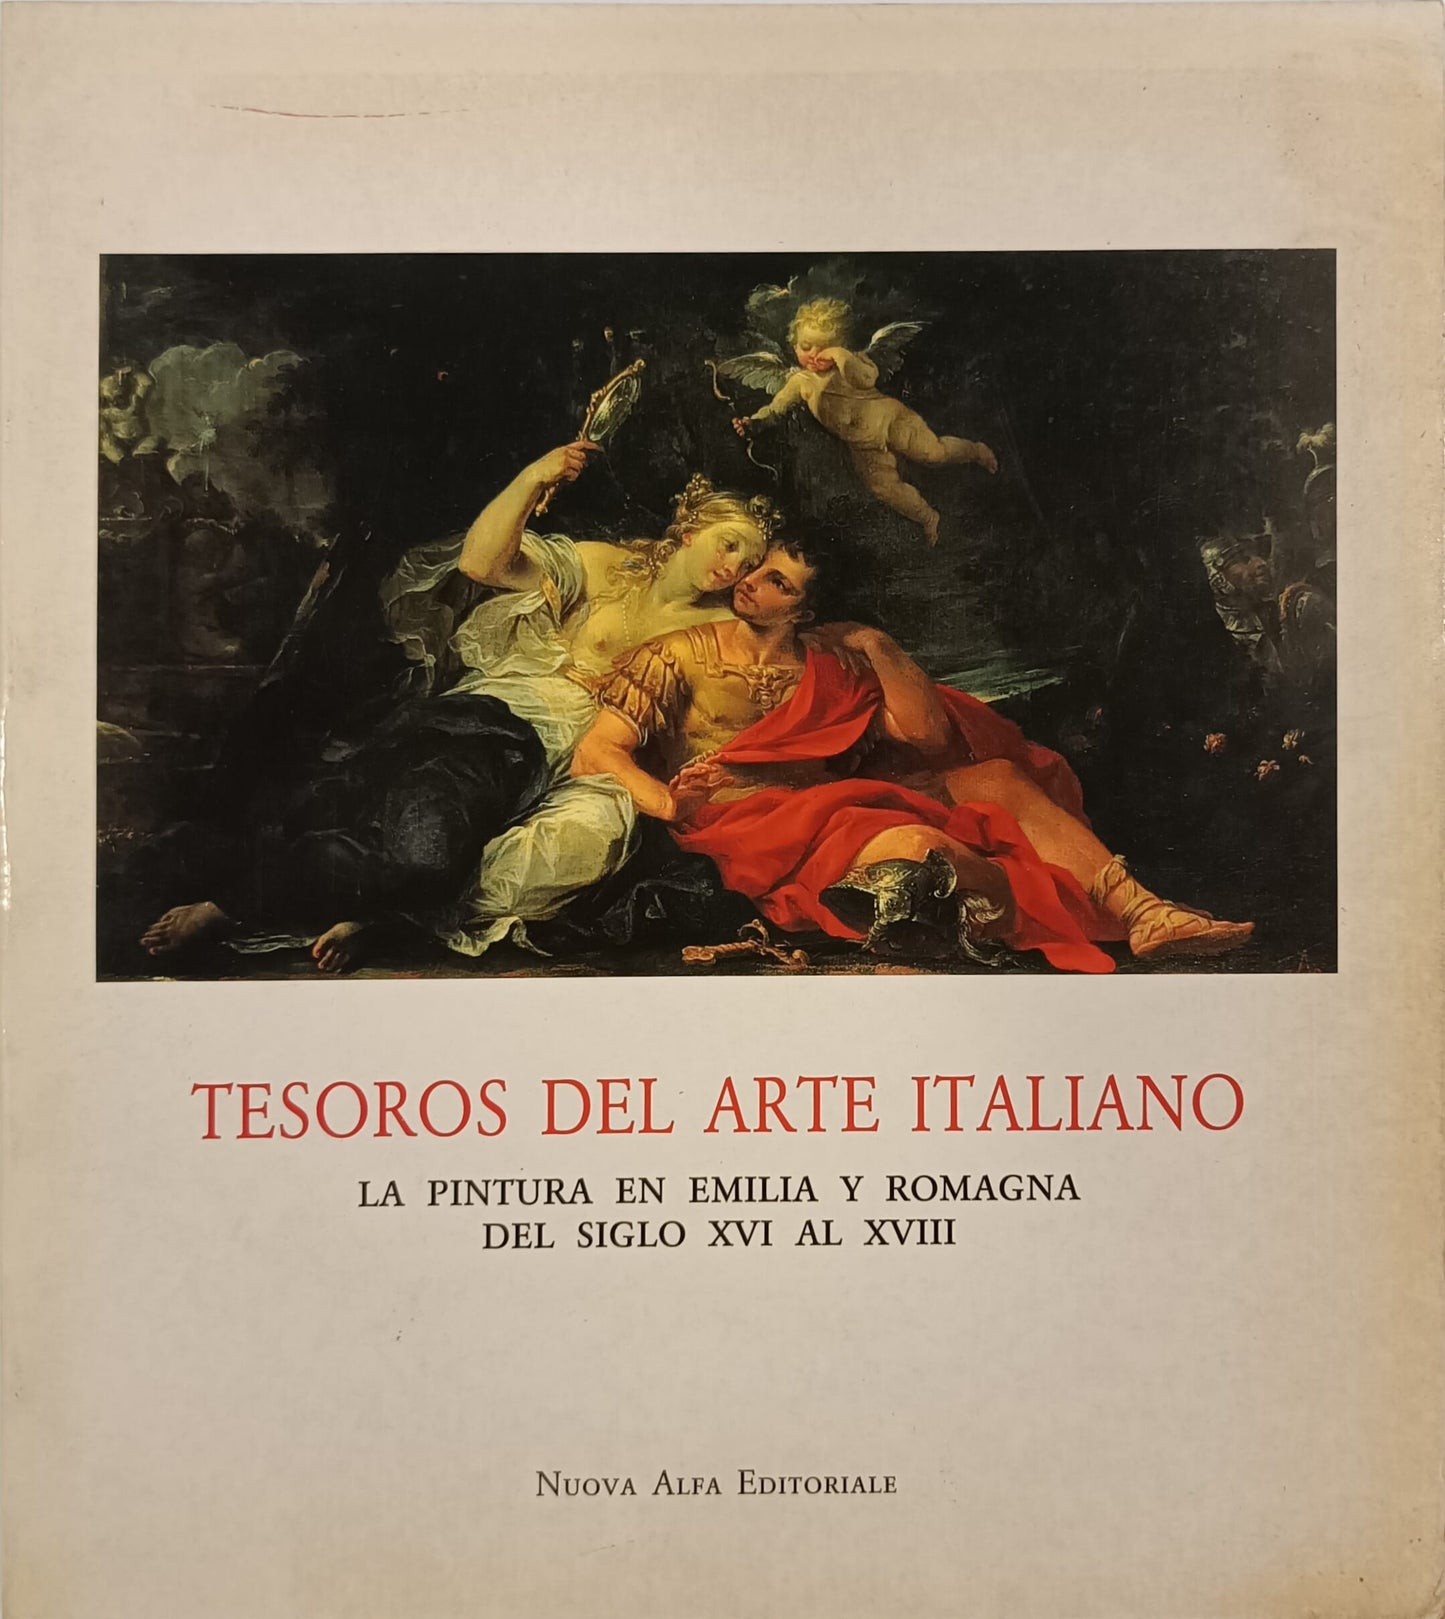 Tesoros del Arte Italiano. La pintura en Emilia y Romagna del siglo XVI al XVIII